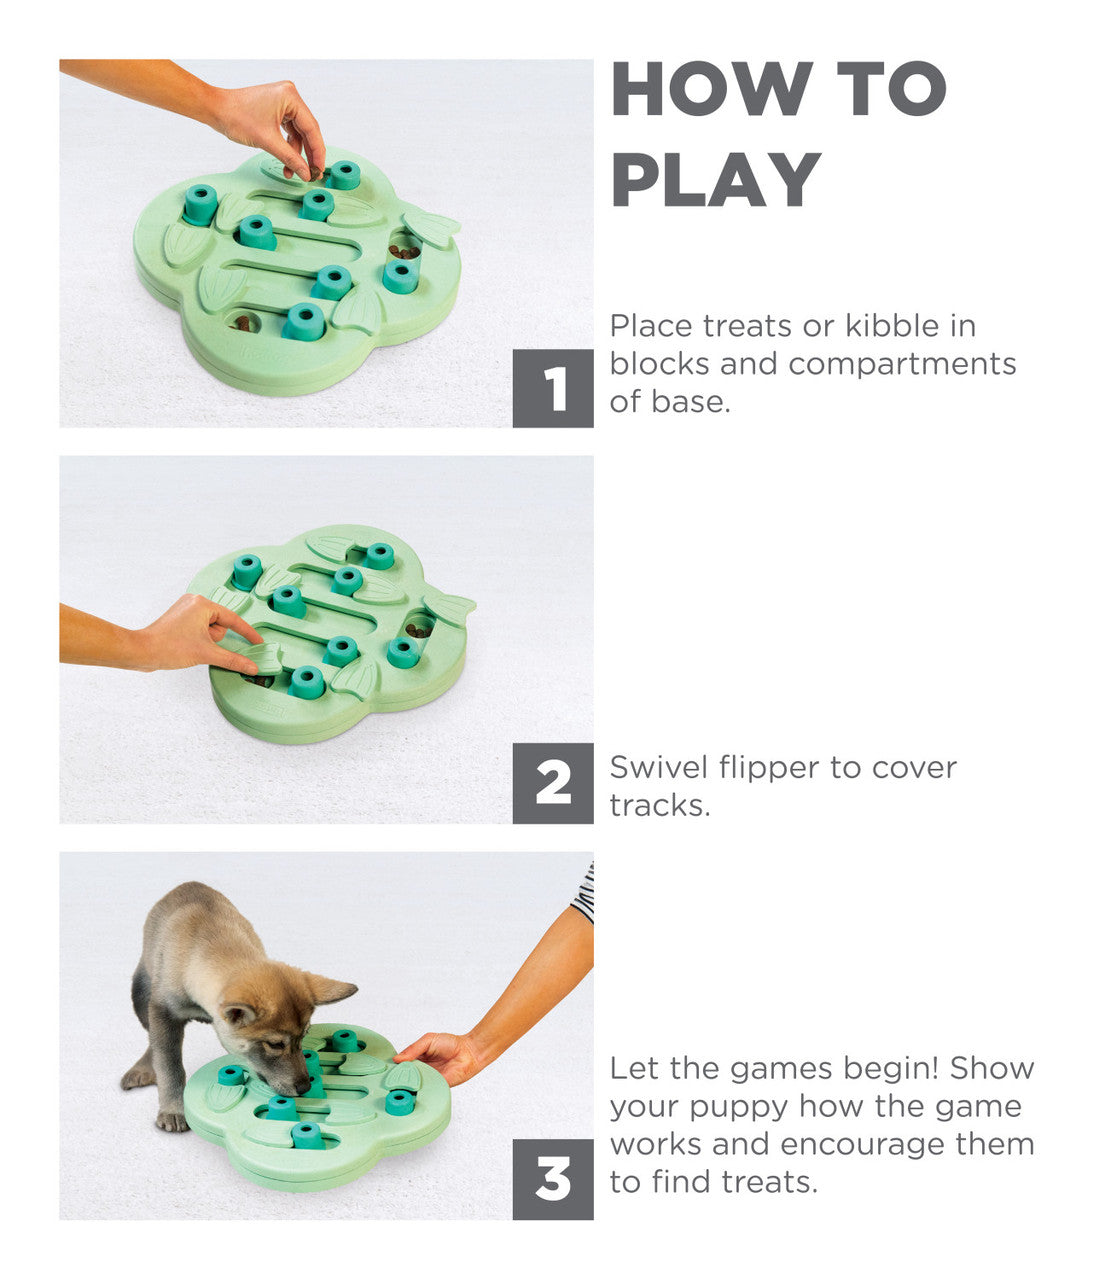 Outward Hound - Hide N' Slide Interactive Treat Puzzle Dog Toy